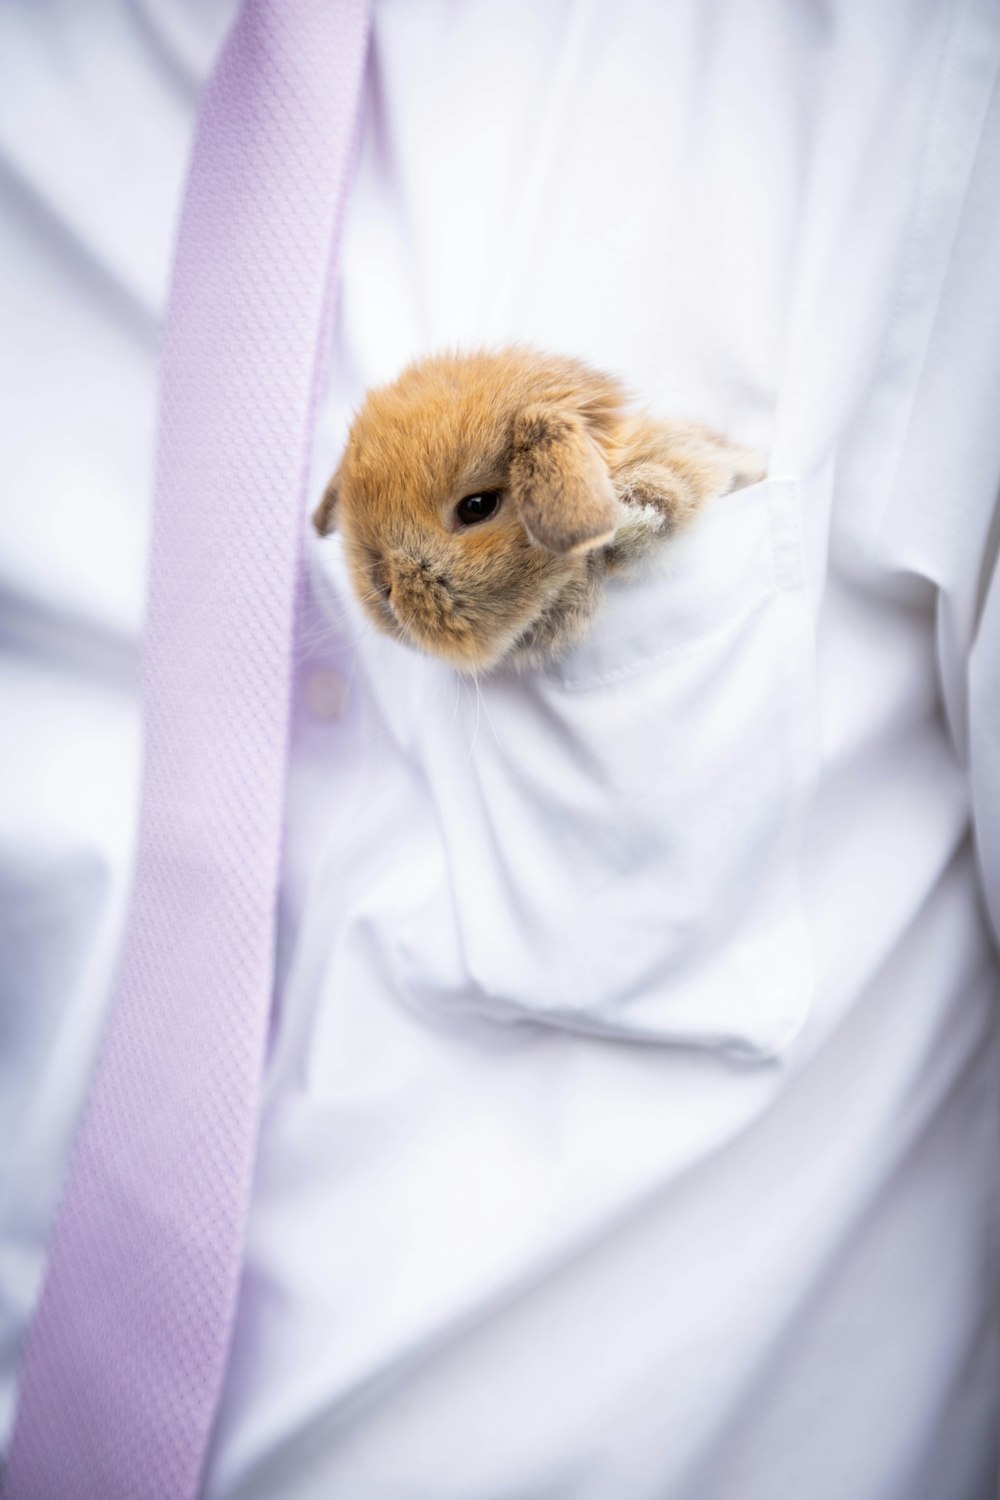 brown and white rabbit on white textile